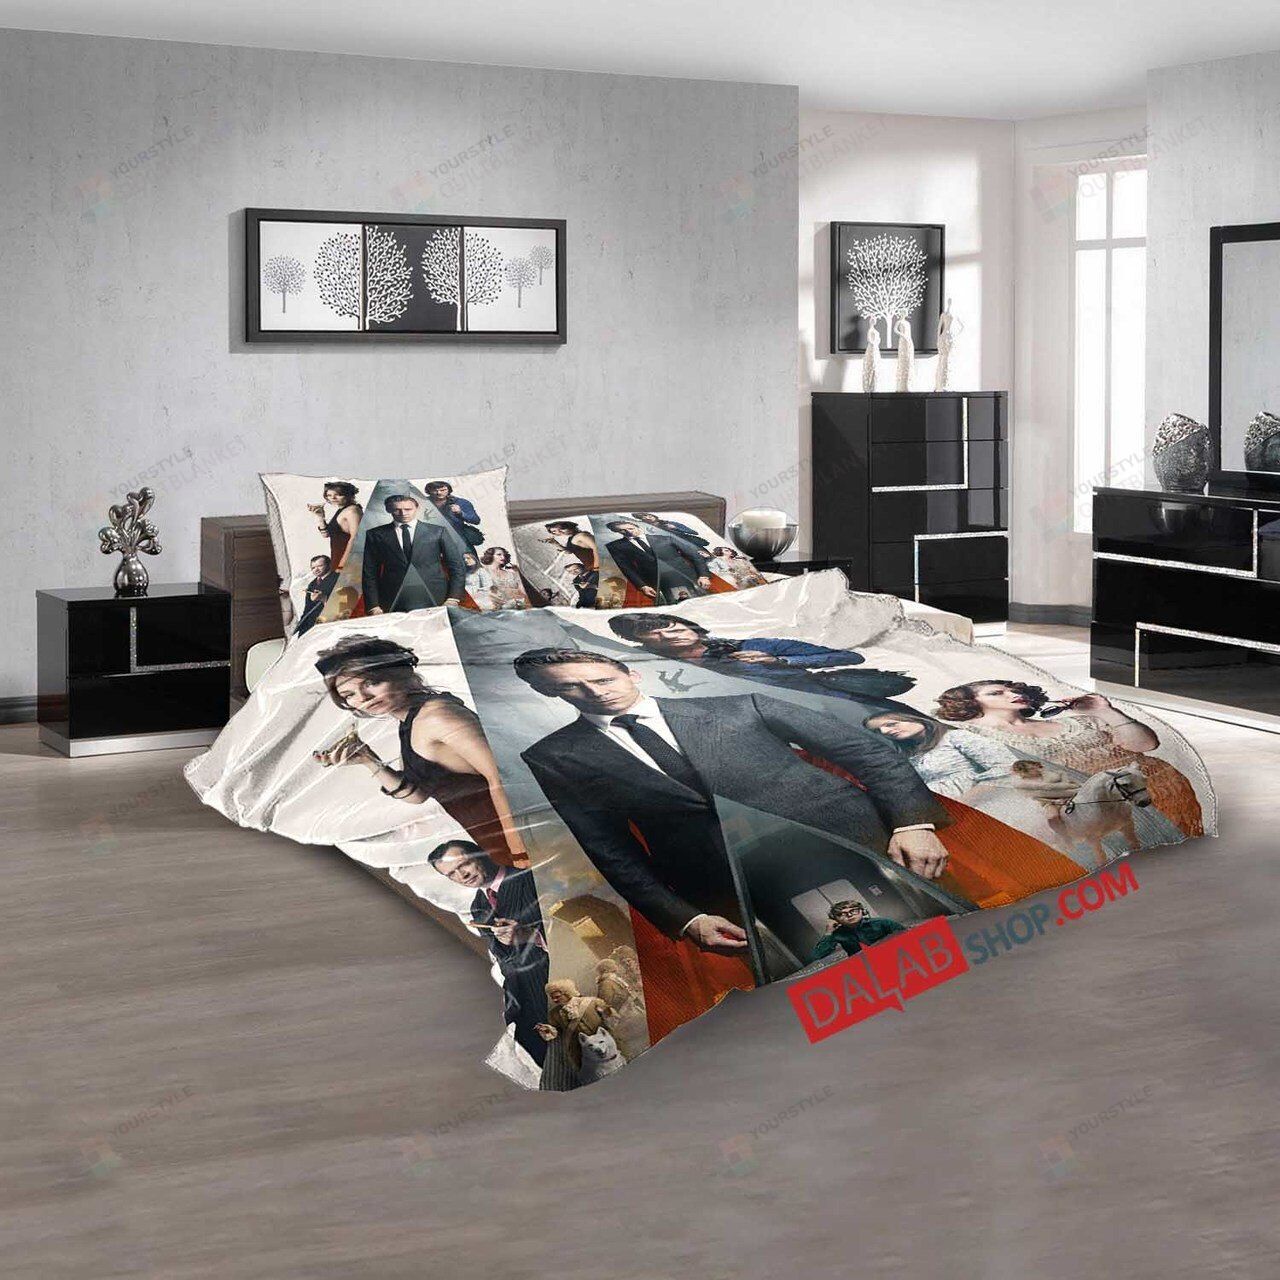 Movie High-Rise D 3d Customized Duvet Cover Bedroom Sets Bedding Sets